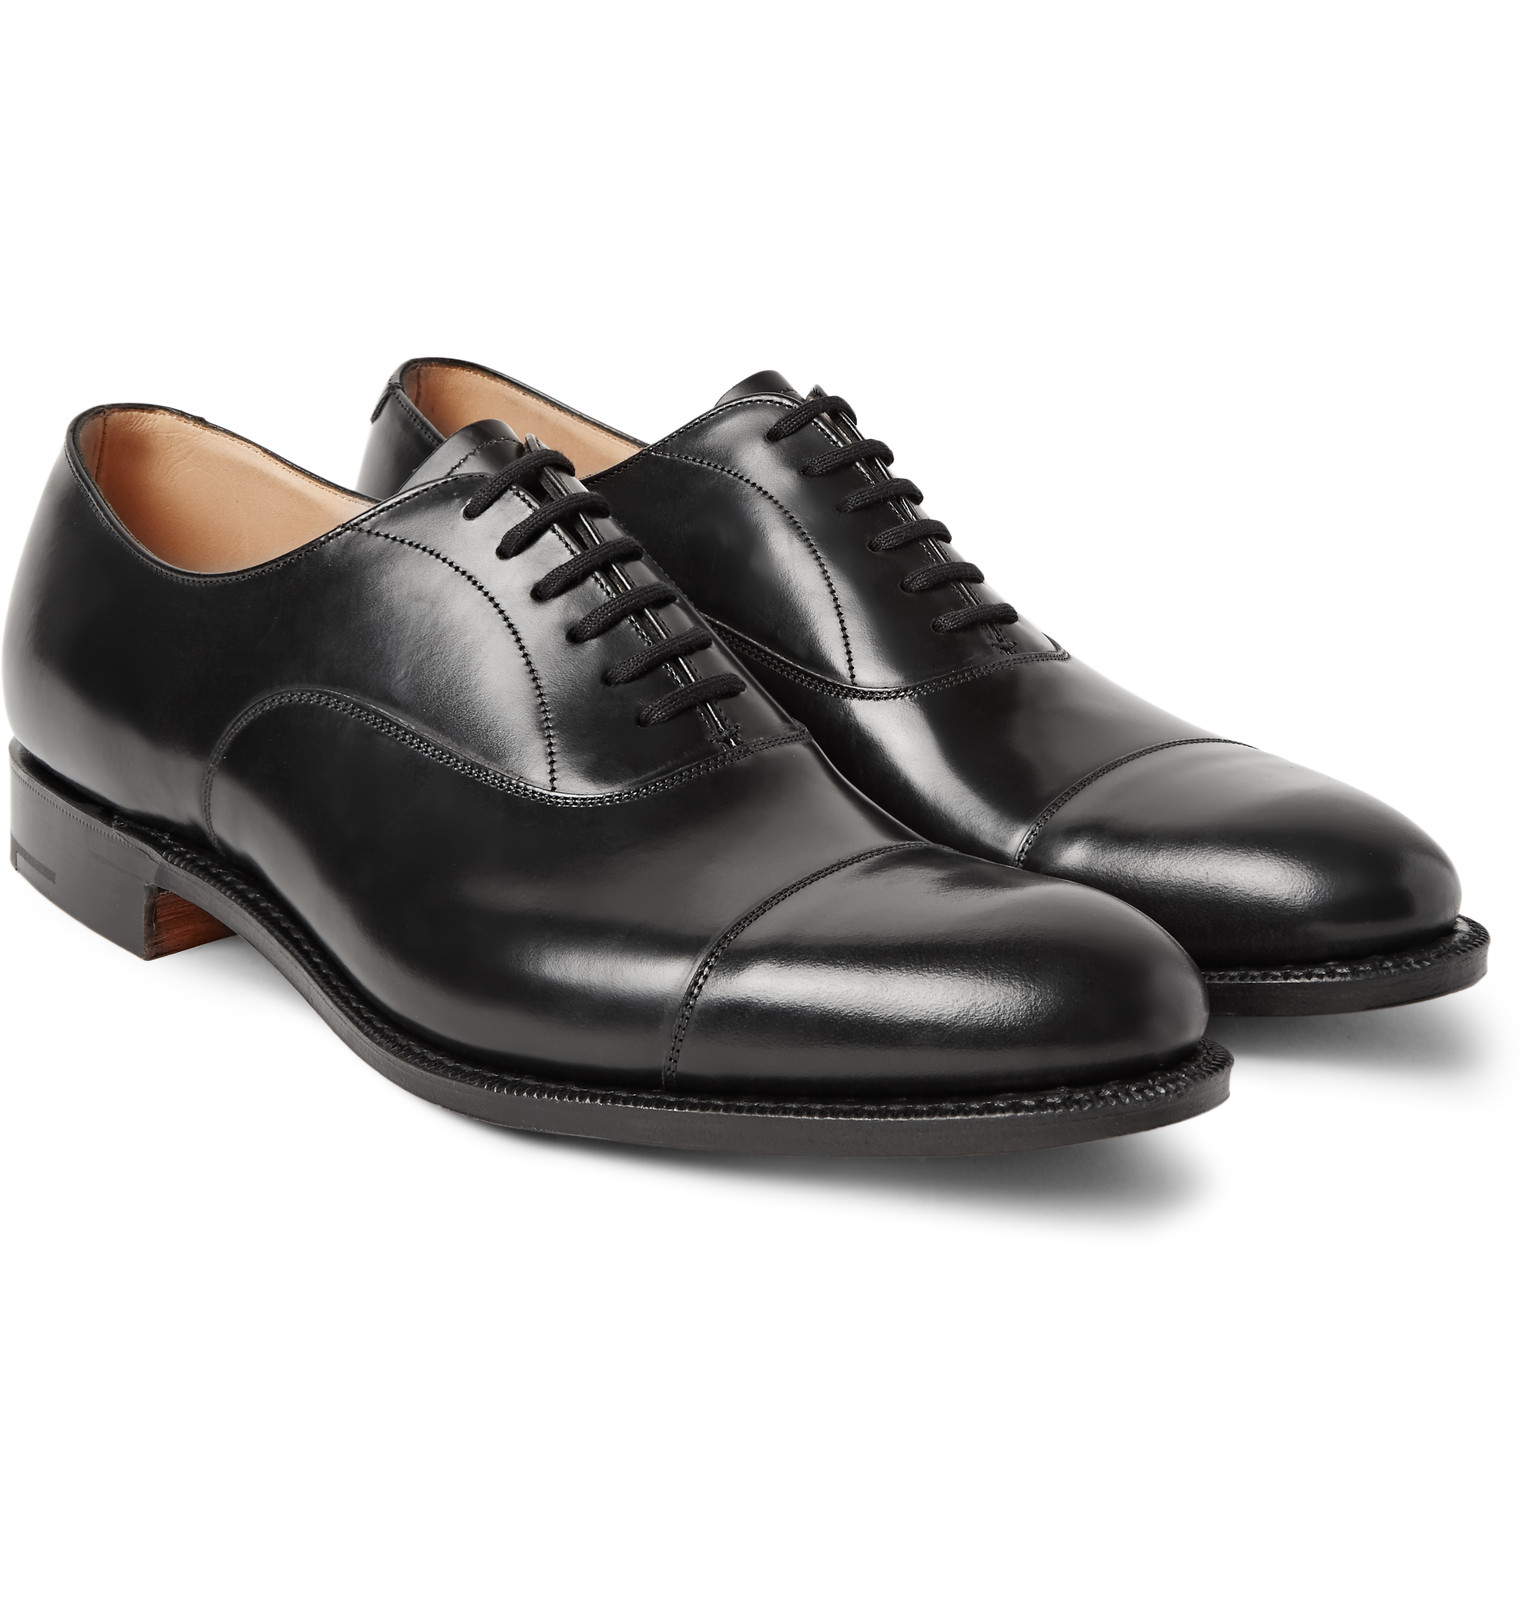 churchu0027sdubai polished-leather oxford shoes LKJBHTD